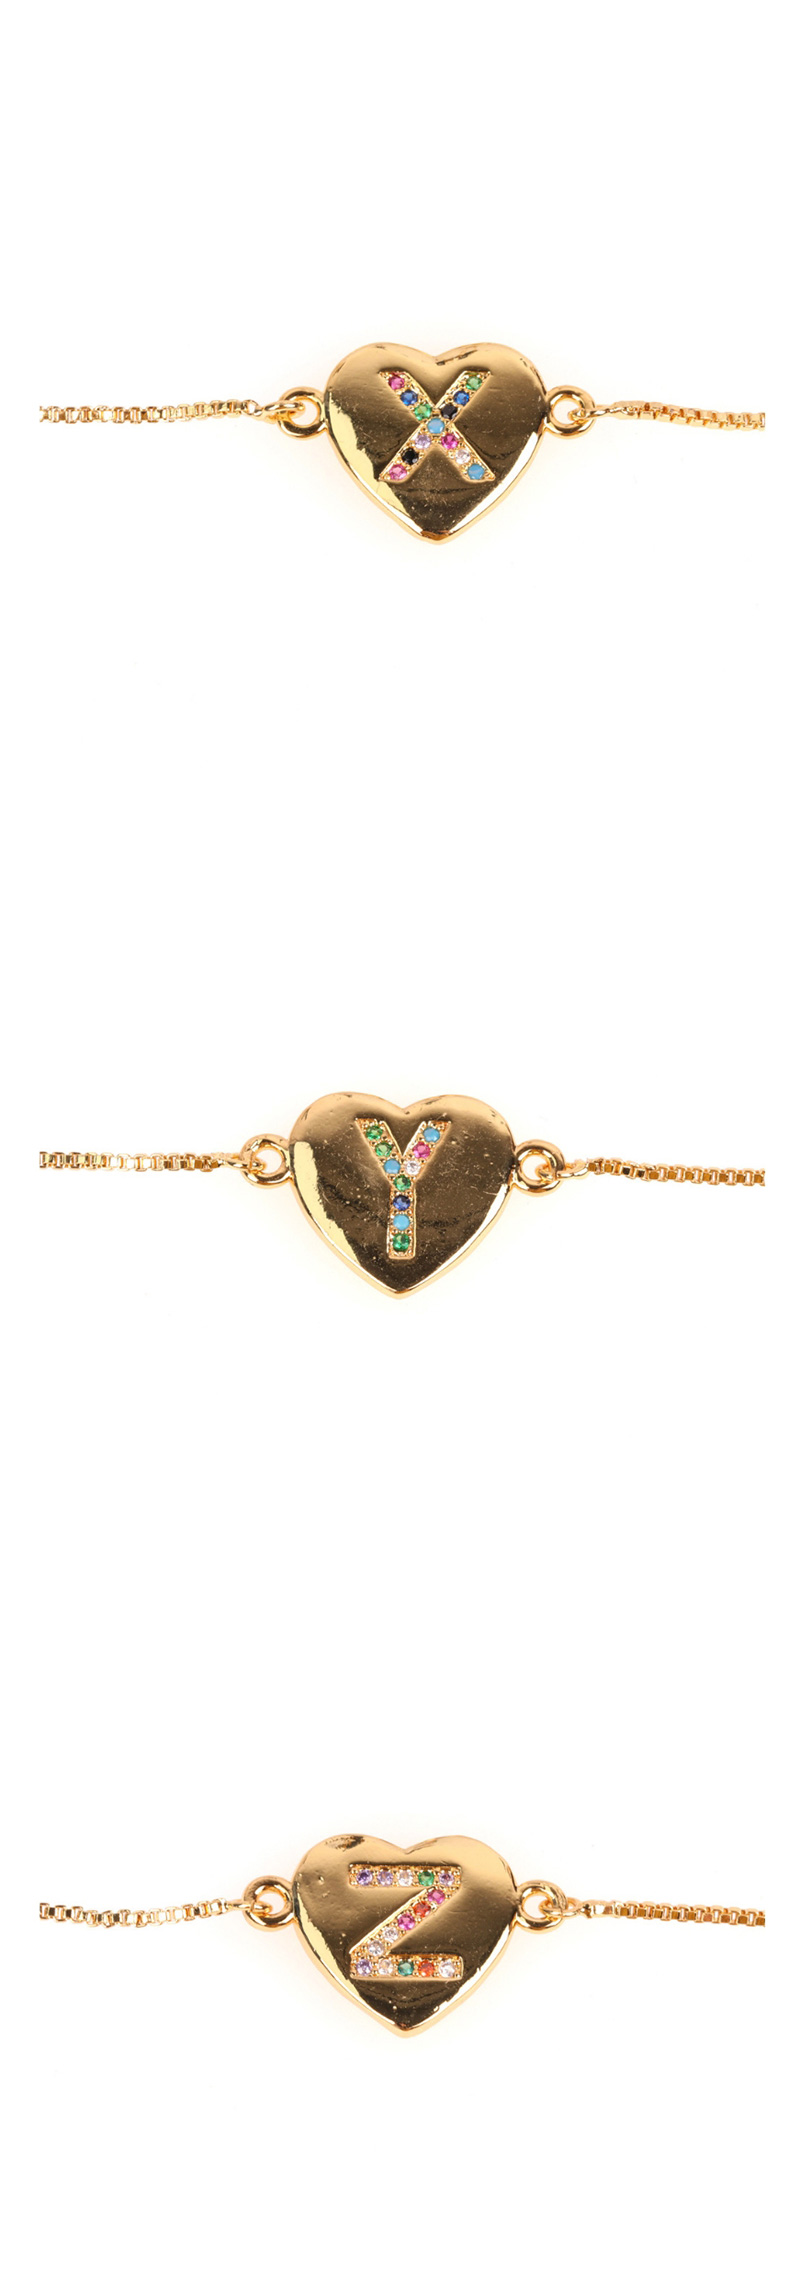 Fashion S Golden Heart Bracelet With Diamonds And Letters,Bracelets